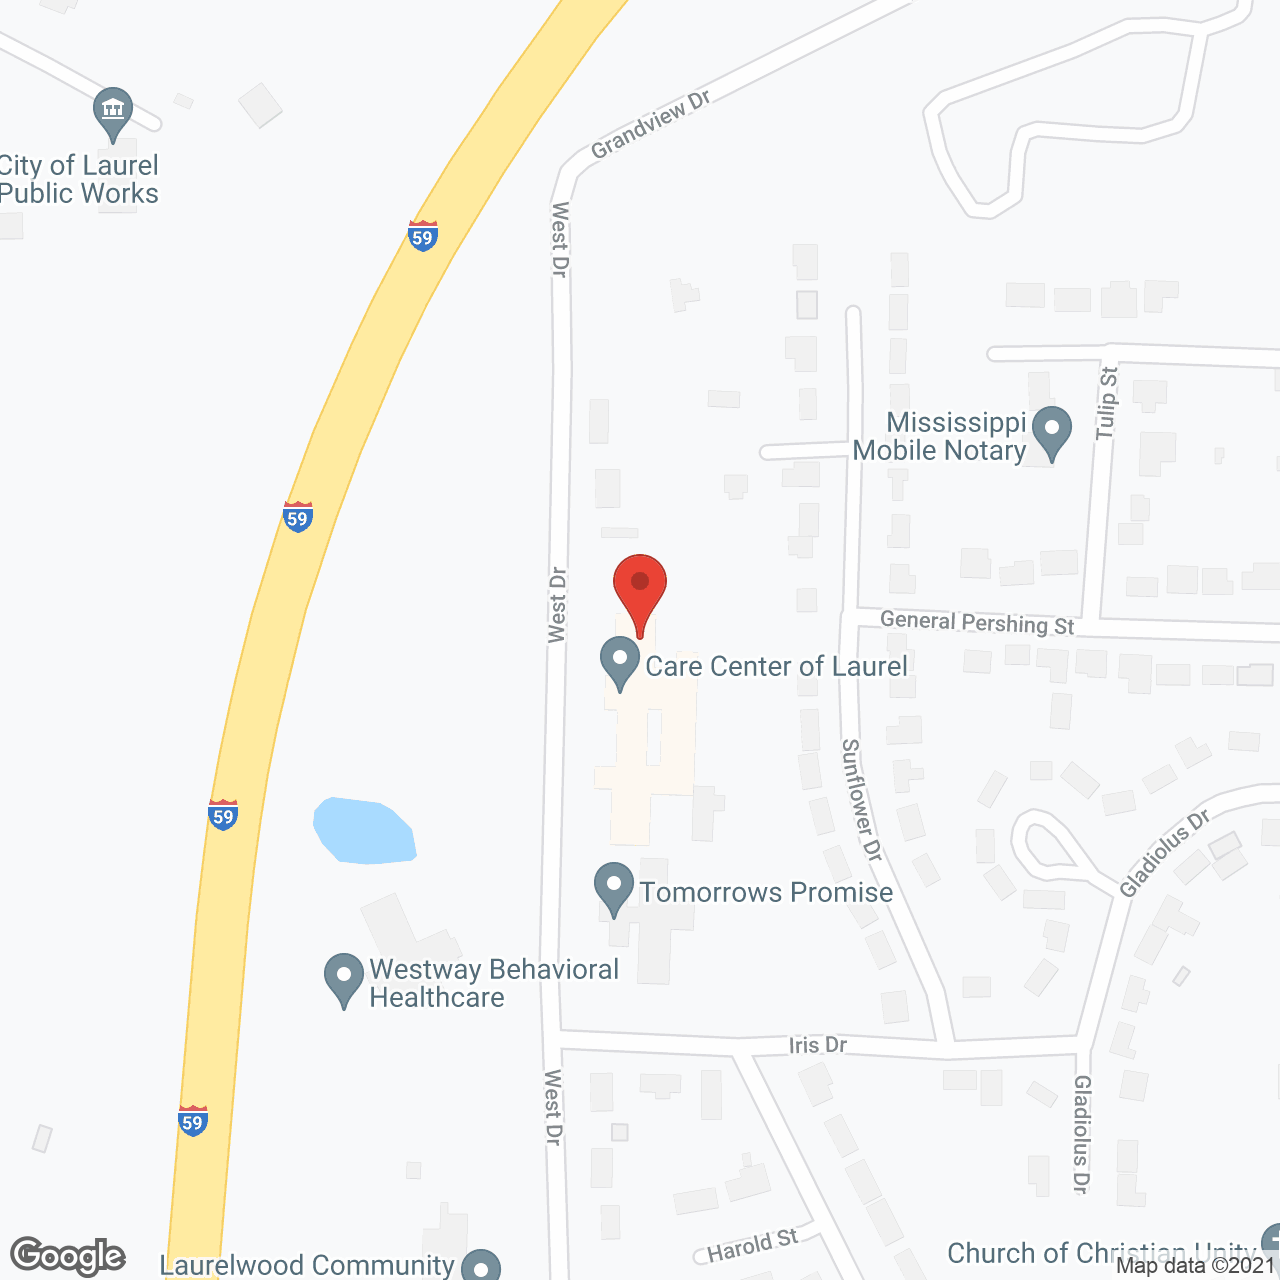 Care Center-Laurel in google map